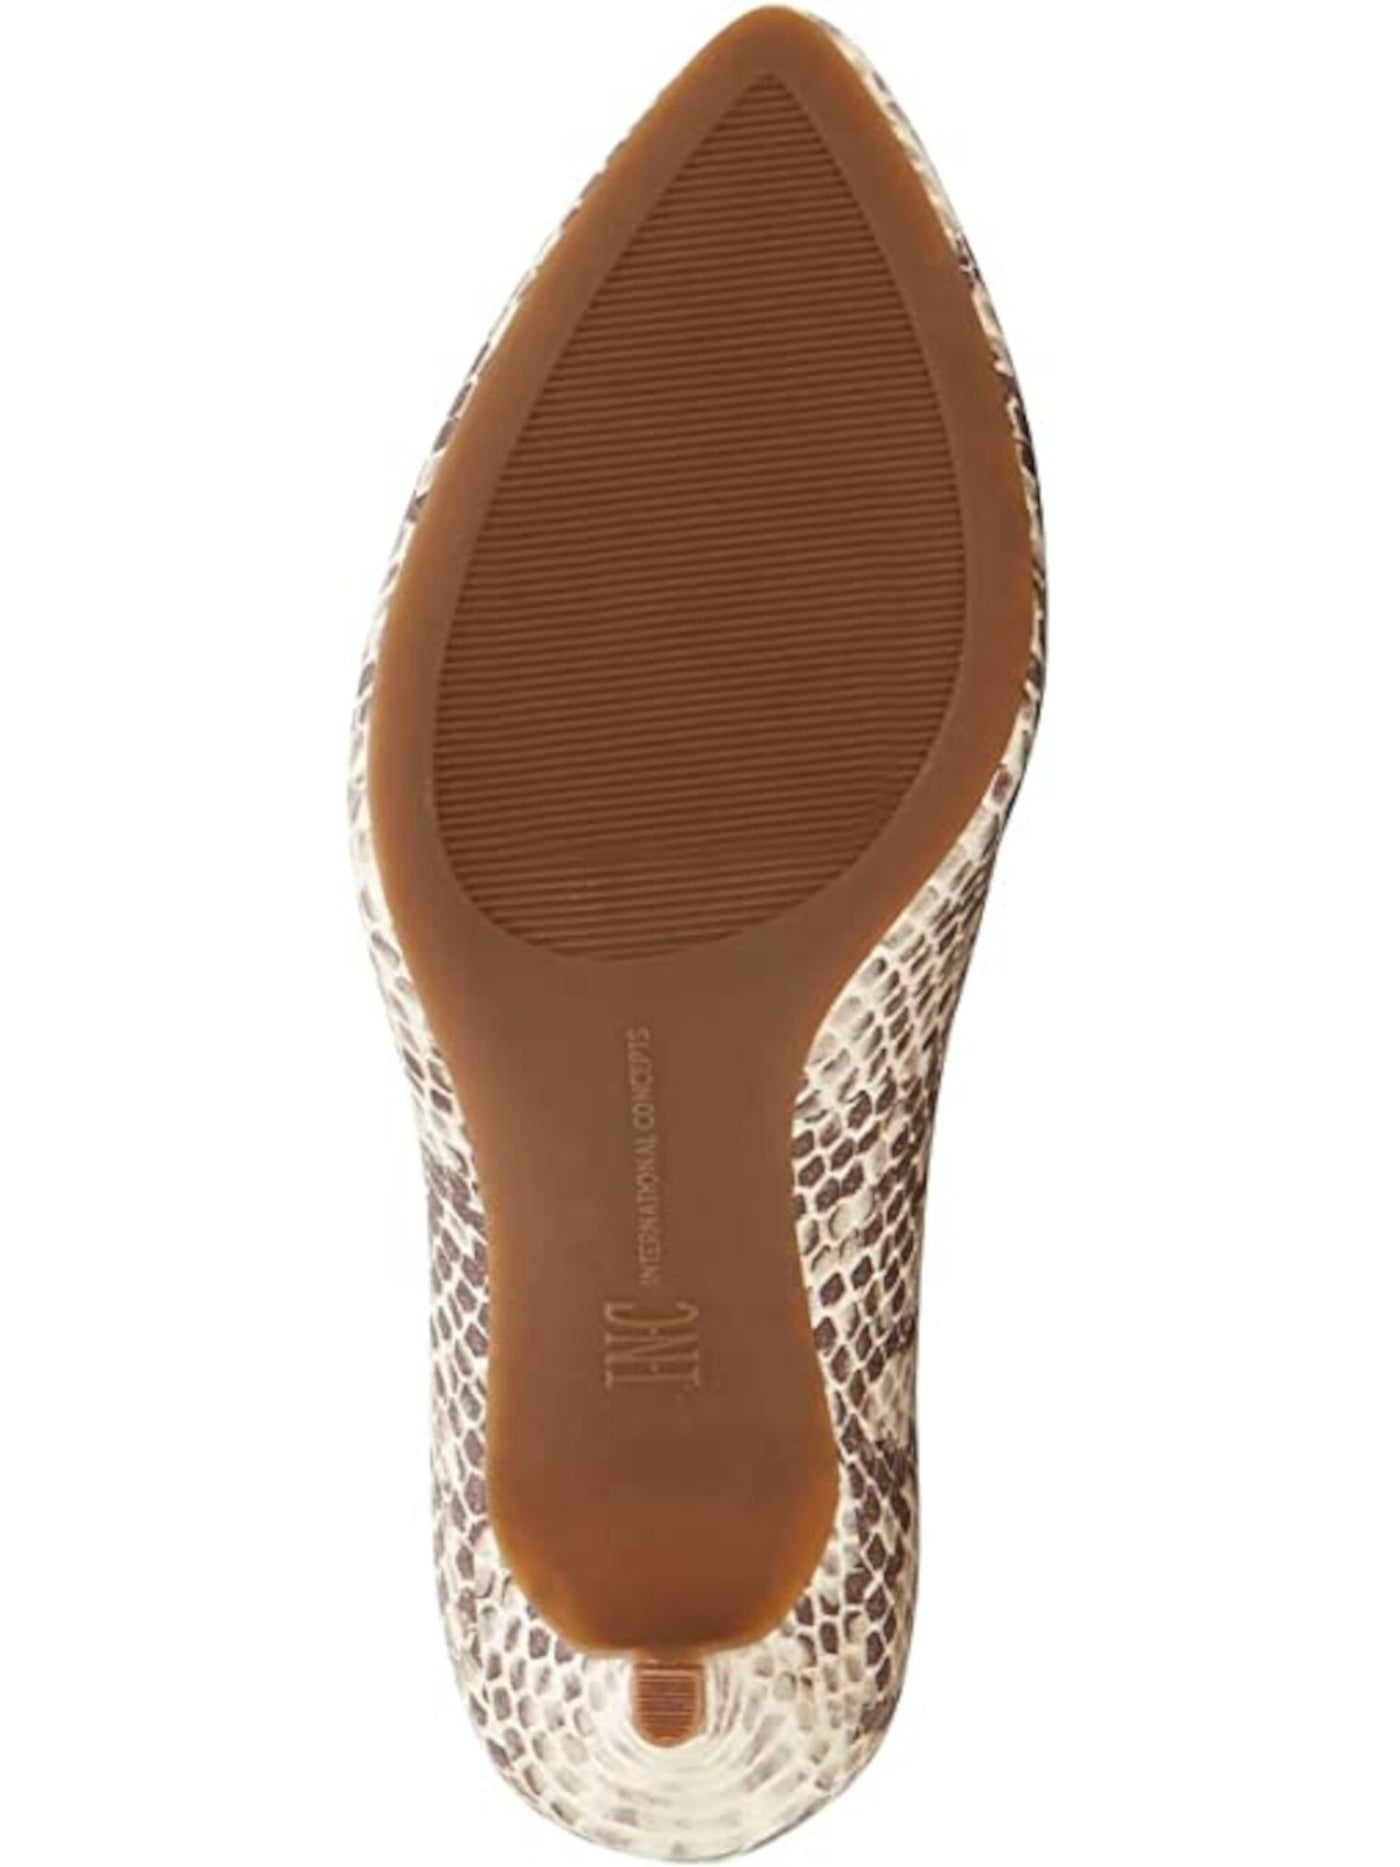 INC Womens Beige Comfort Zitah Pointed Toe Stiletto Slip On Dress Pumps Shoes M